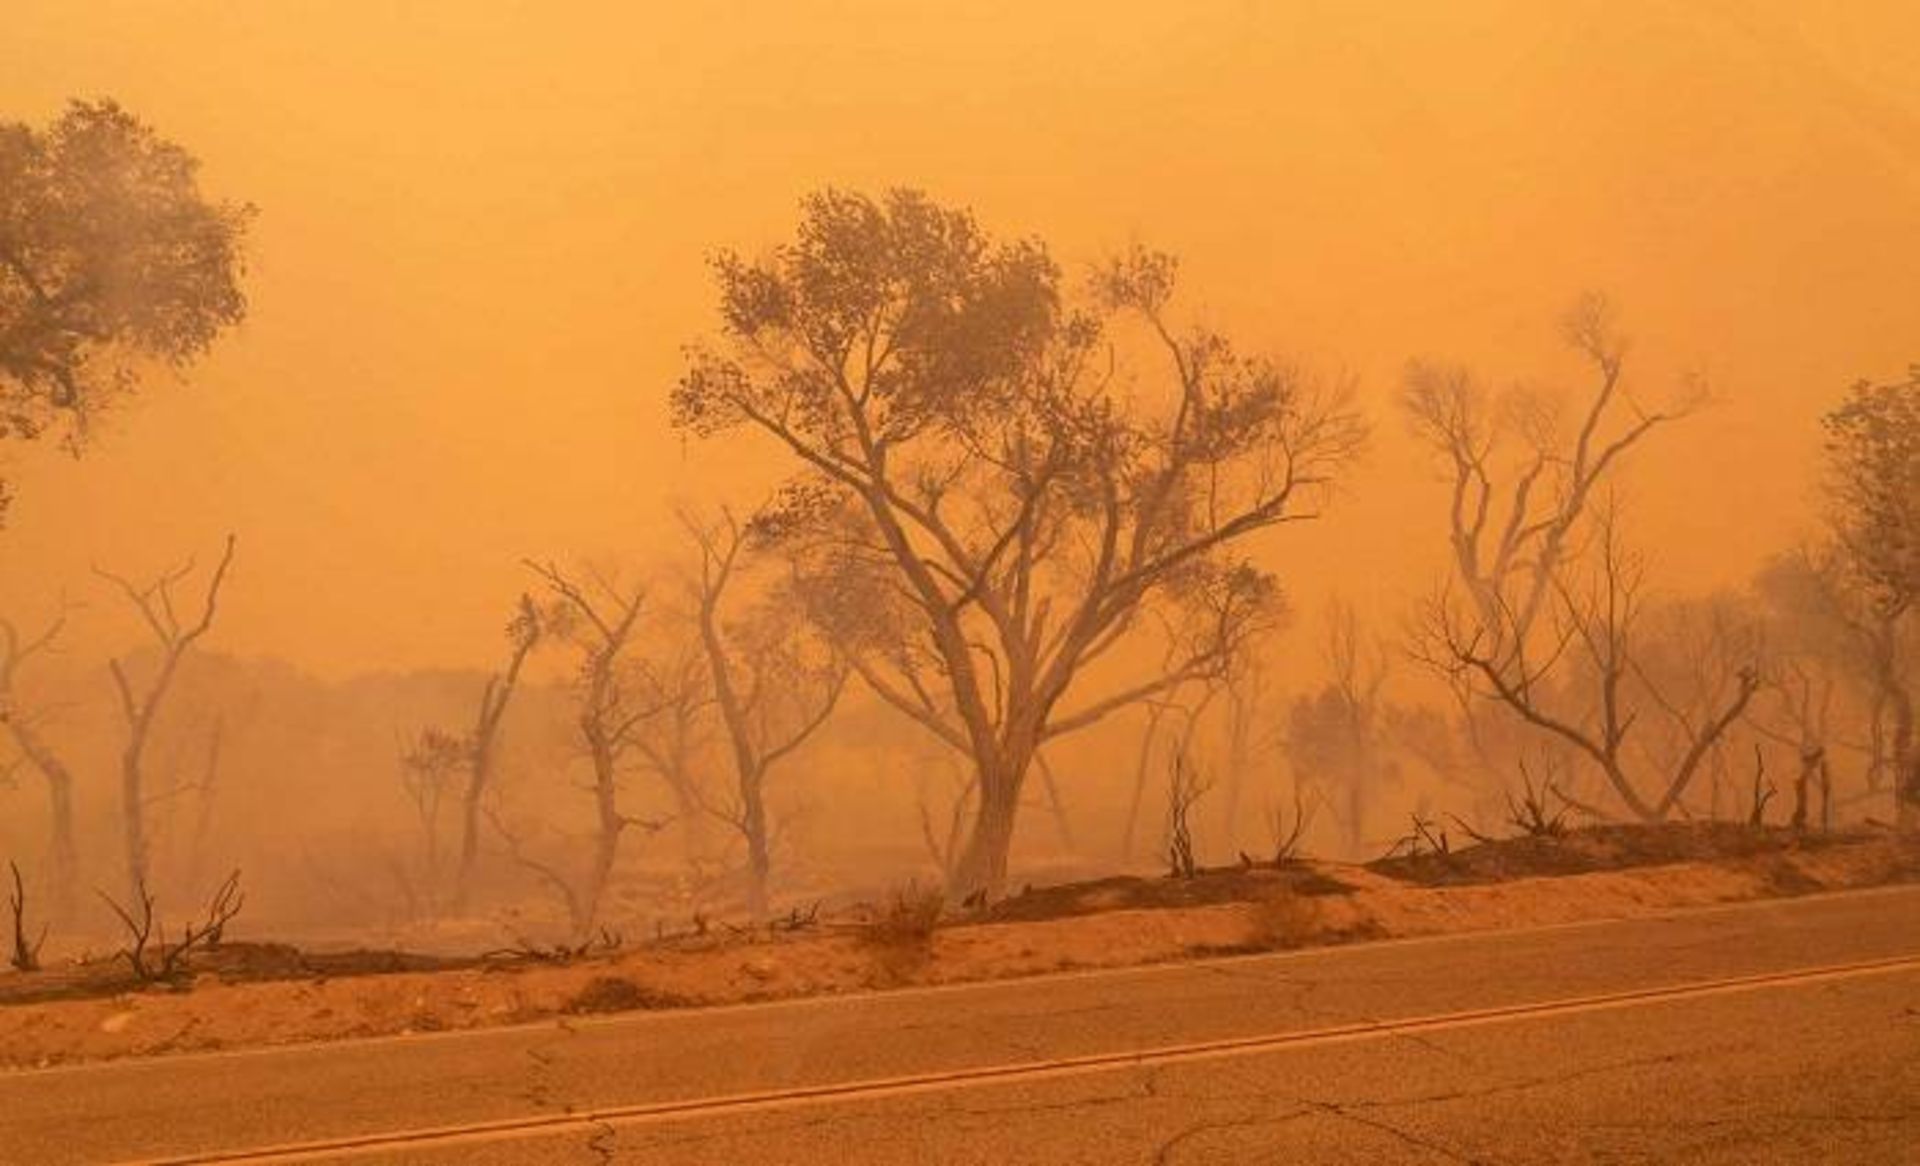 مرجع متخصصين ايران آتش سوزي كاليفرنيا / California  wildfire